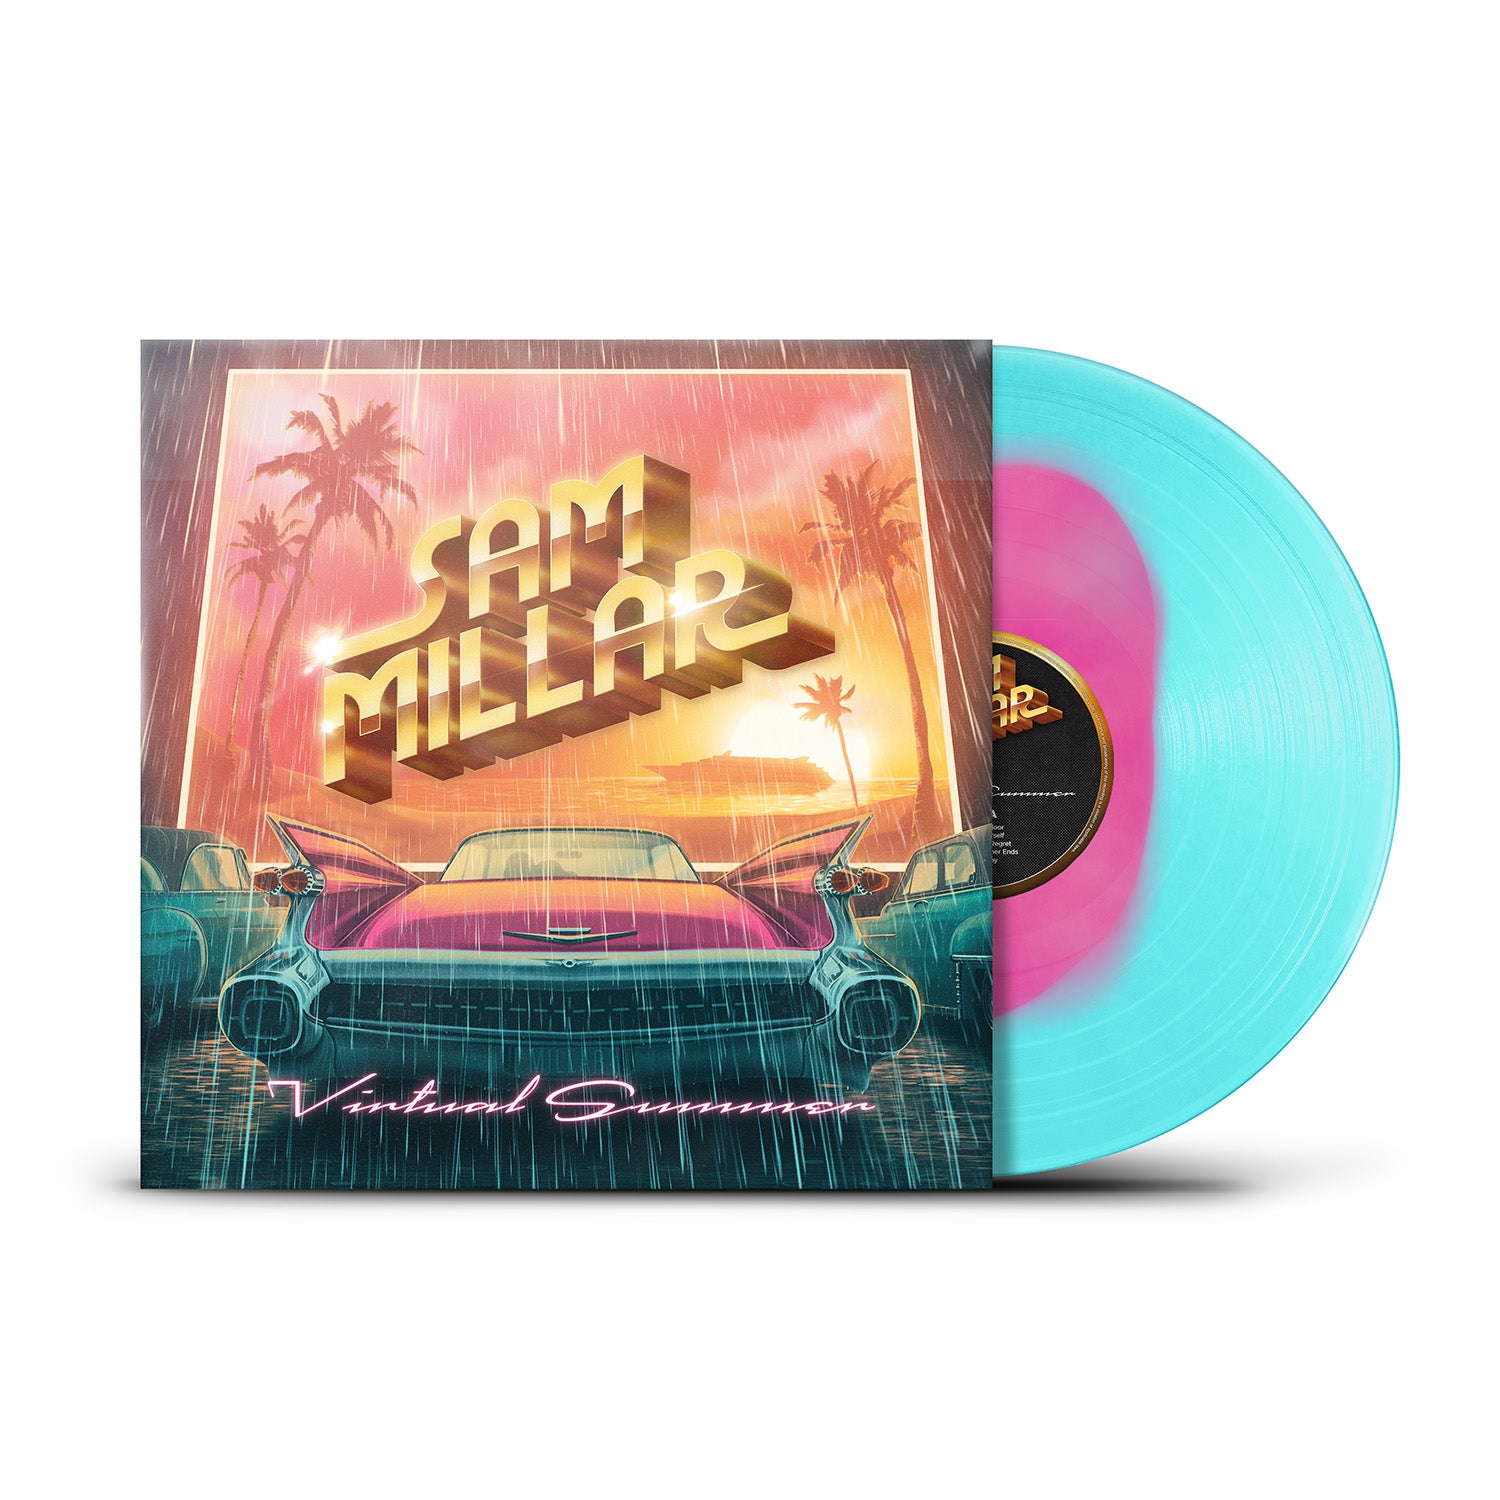 Sam Millar "Virtual Summer" Pink in Blue Vinyl & Download (Ltd to 300 Copies) - PRE-ORDER